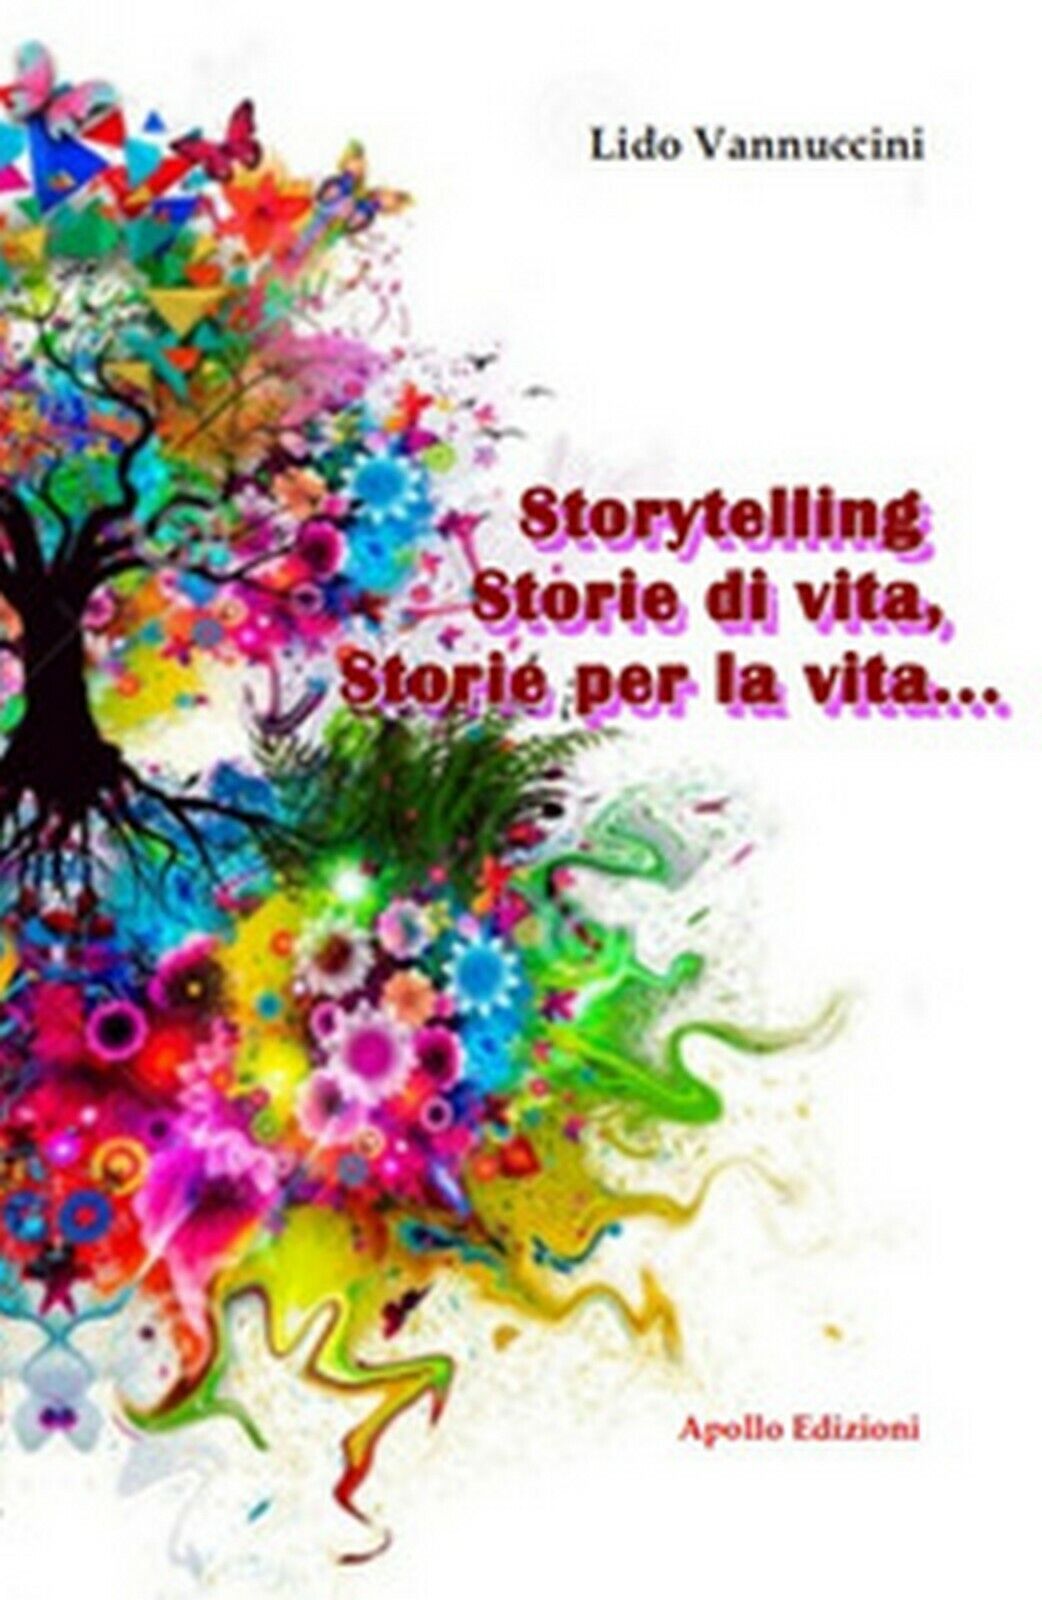 Storytelling, Storie di vita, storie per la vita...  di Lido Vannuccini,  2017, 